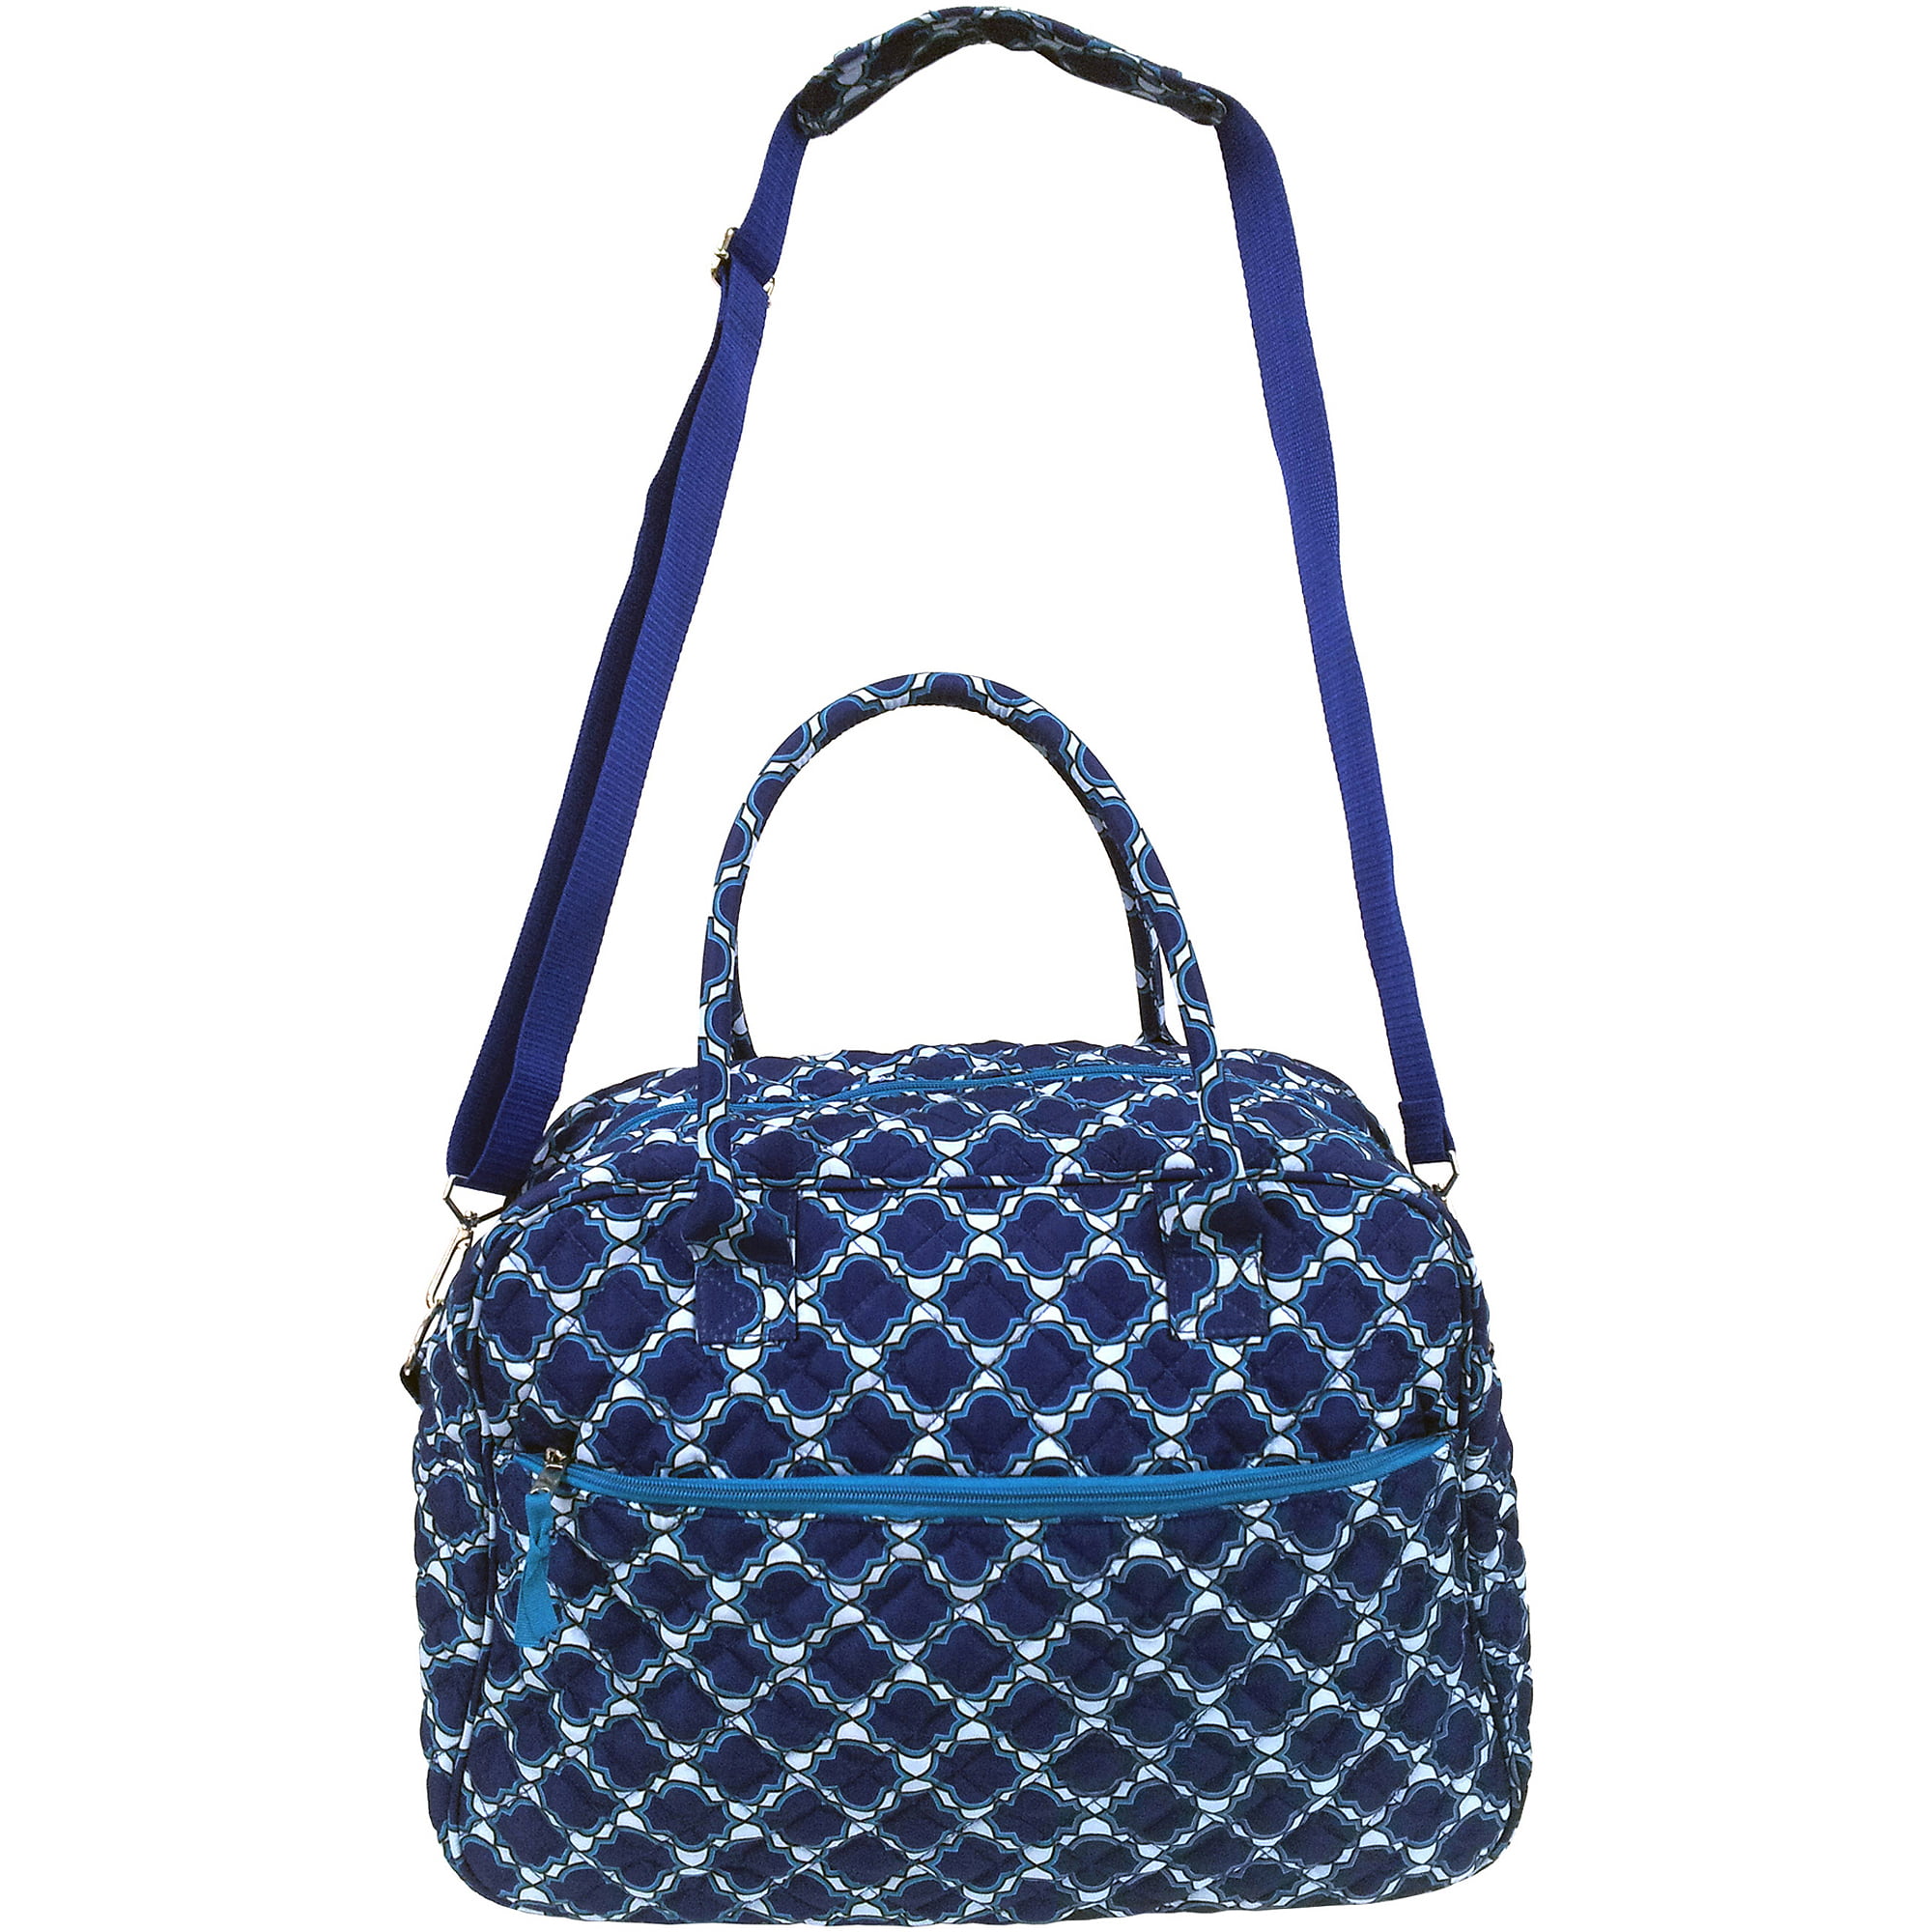 Generic Quilted Duffel Bag, Blue Tile - www.bagssaleusa.com - www.bagssaleusa.com